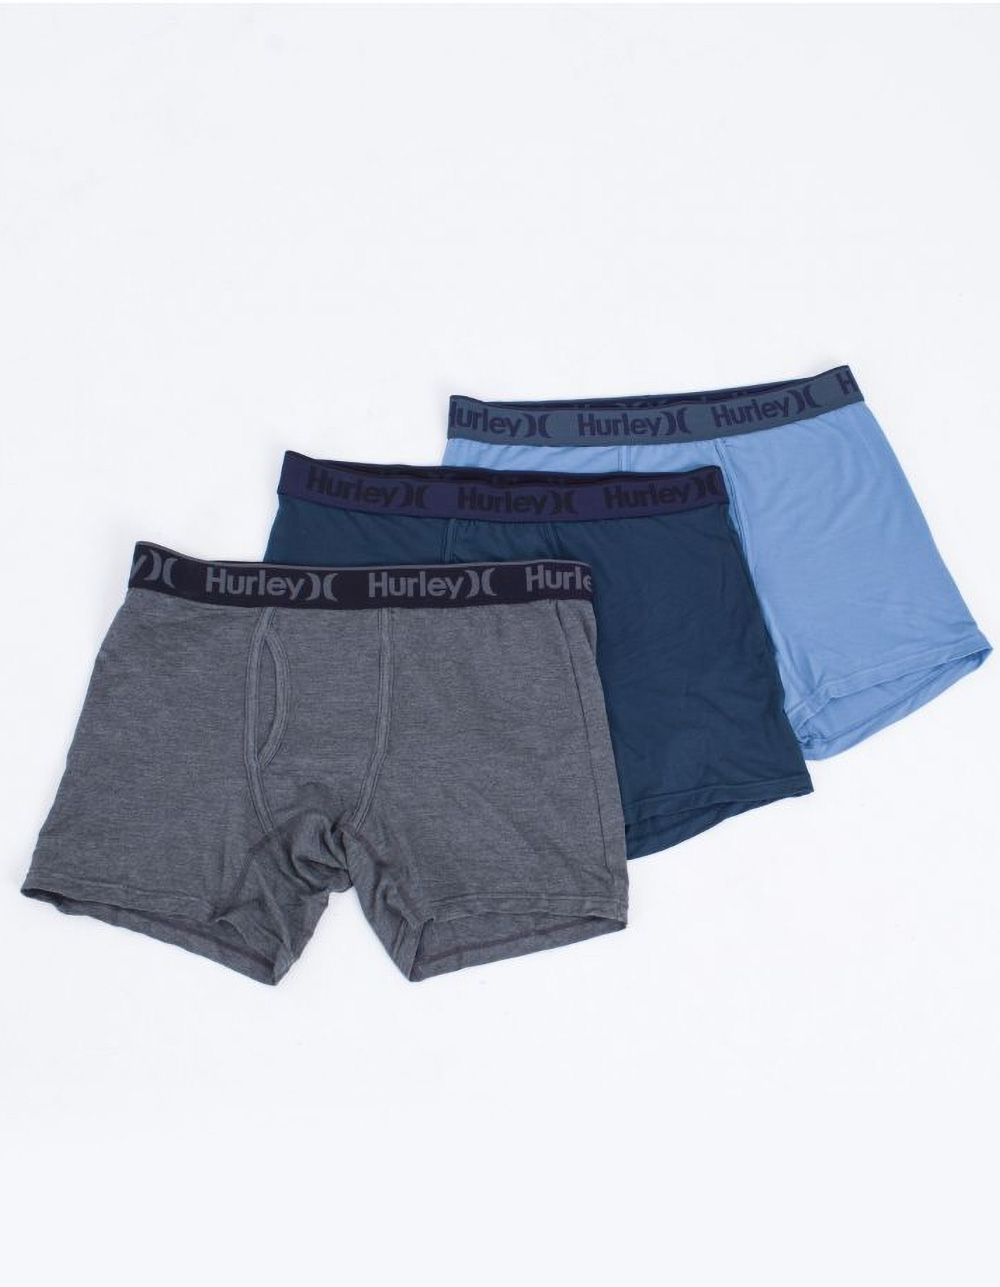 Lux Venus Men's Assorted Color Trunk (Pack of 3) - Underwear